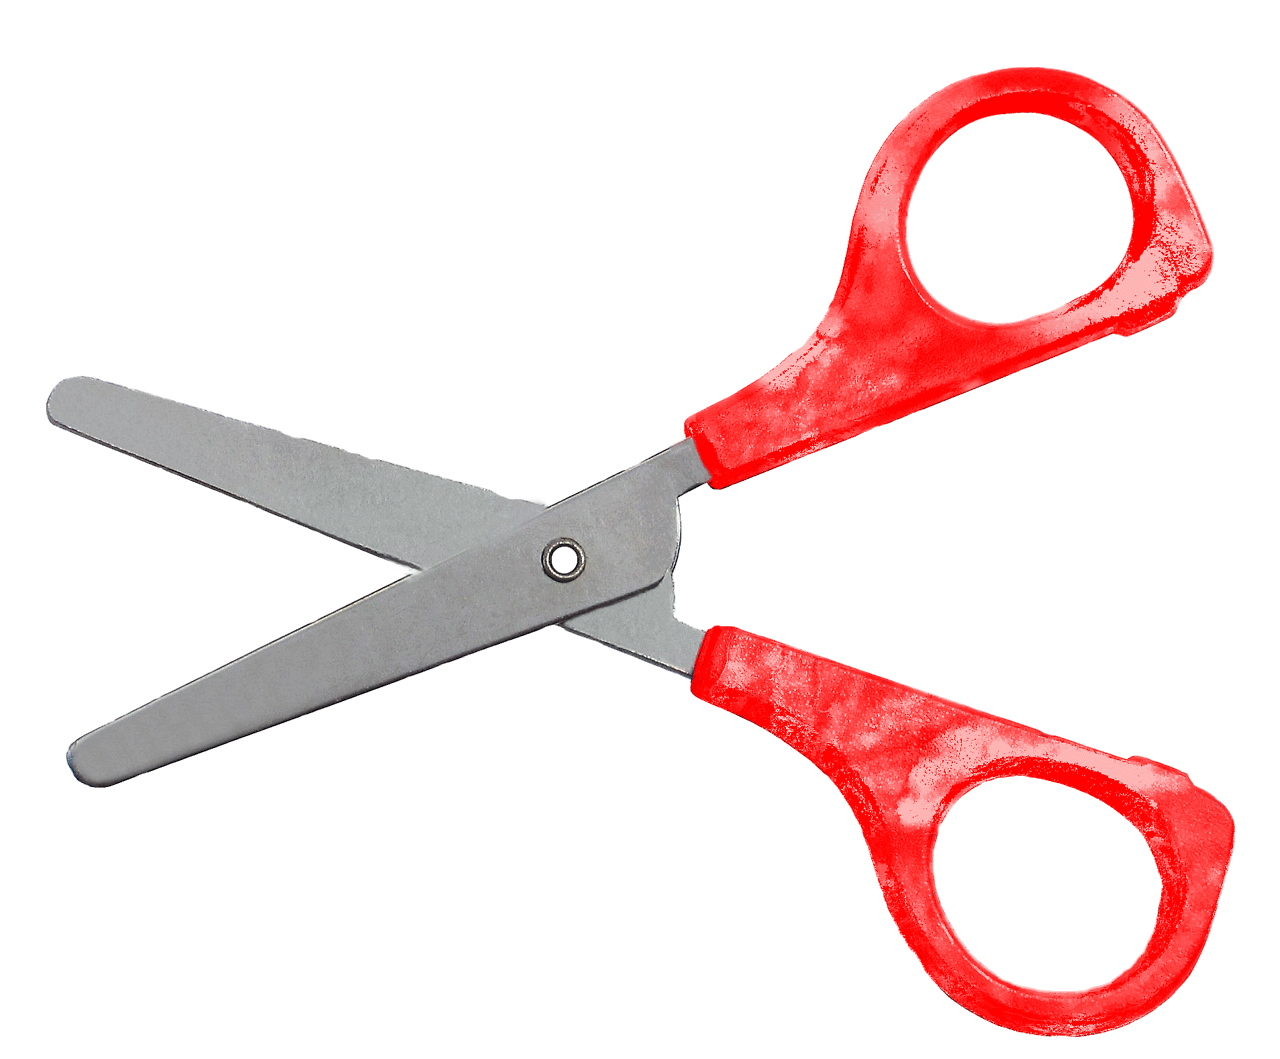 Clipart scissors tumblr transparent. Cutting cut it out